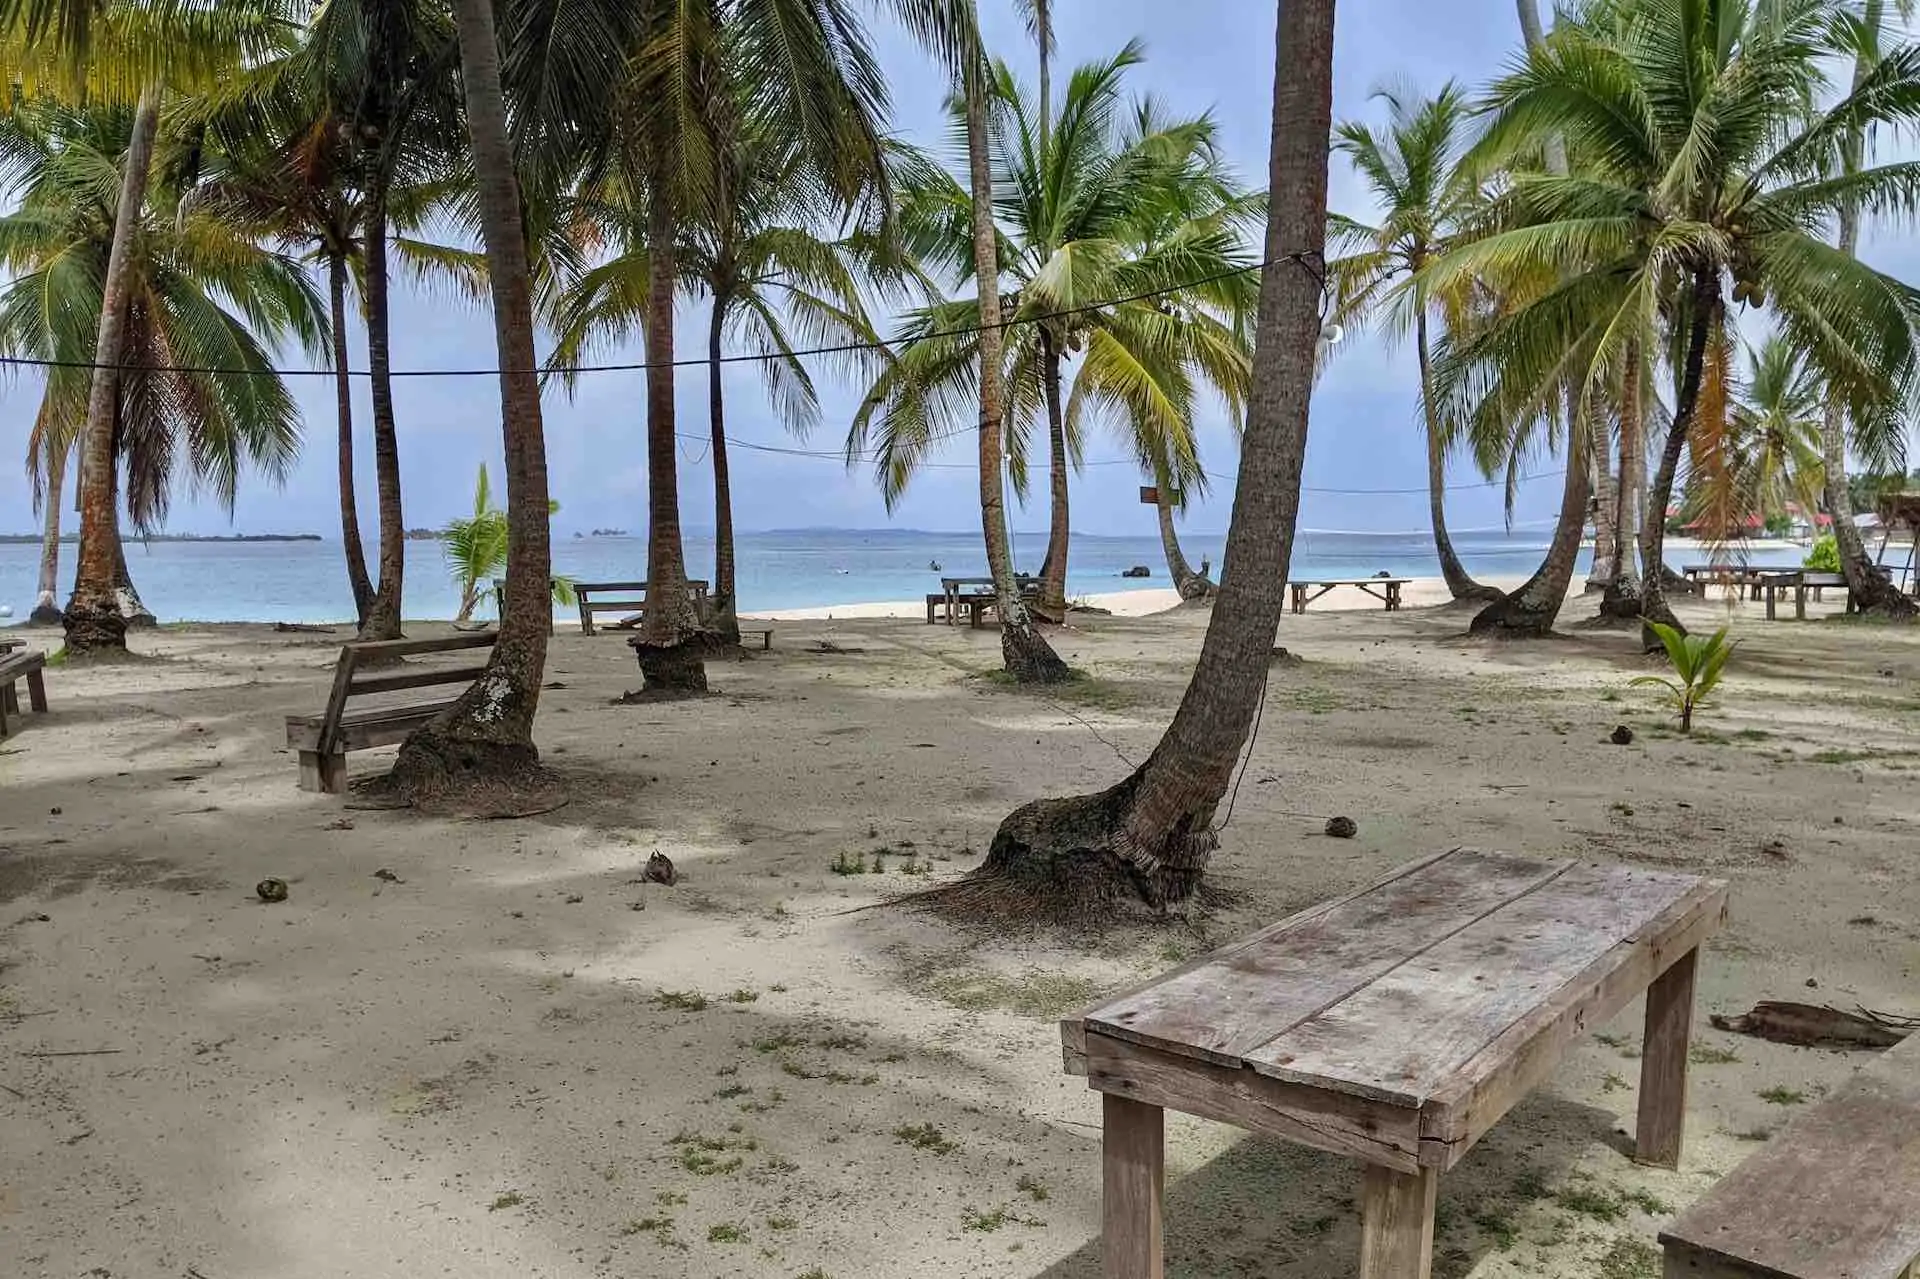 San Blas Isla Perro island view of palm trees and ocean